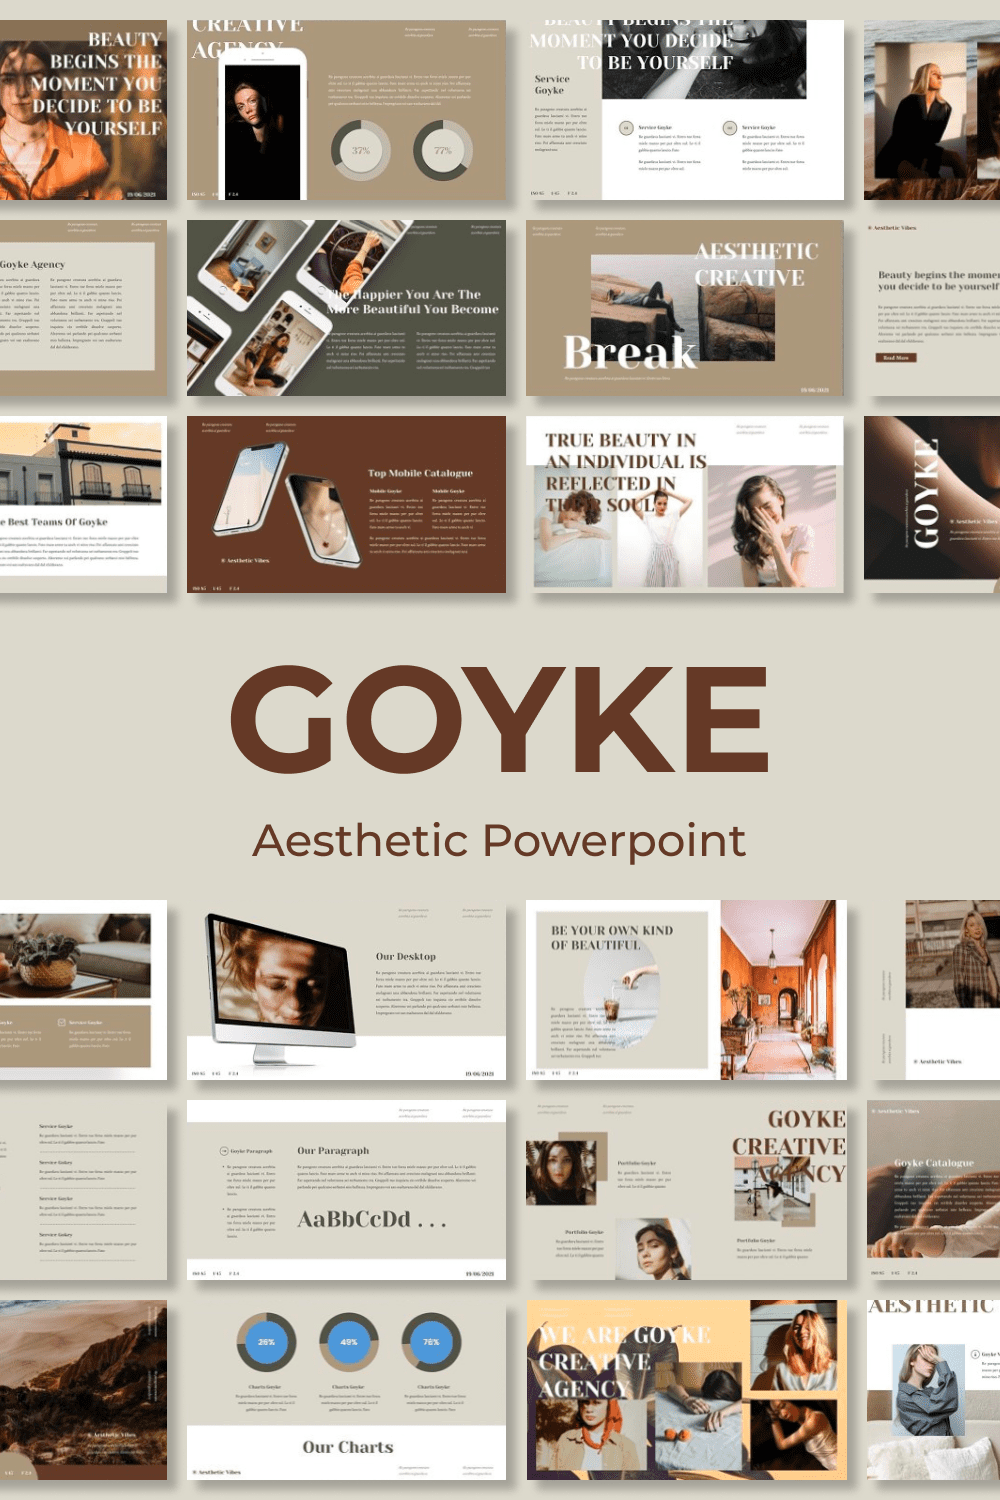 Goyke - Aesthetic Powerpoint Pinterest.